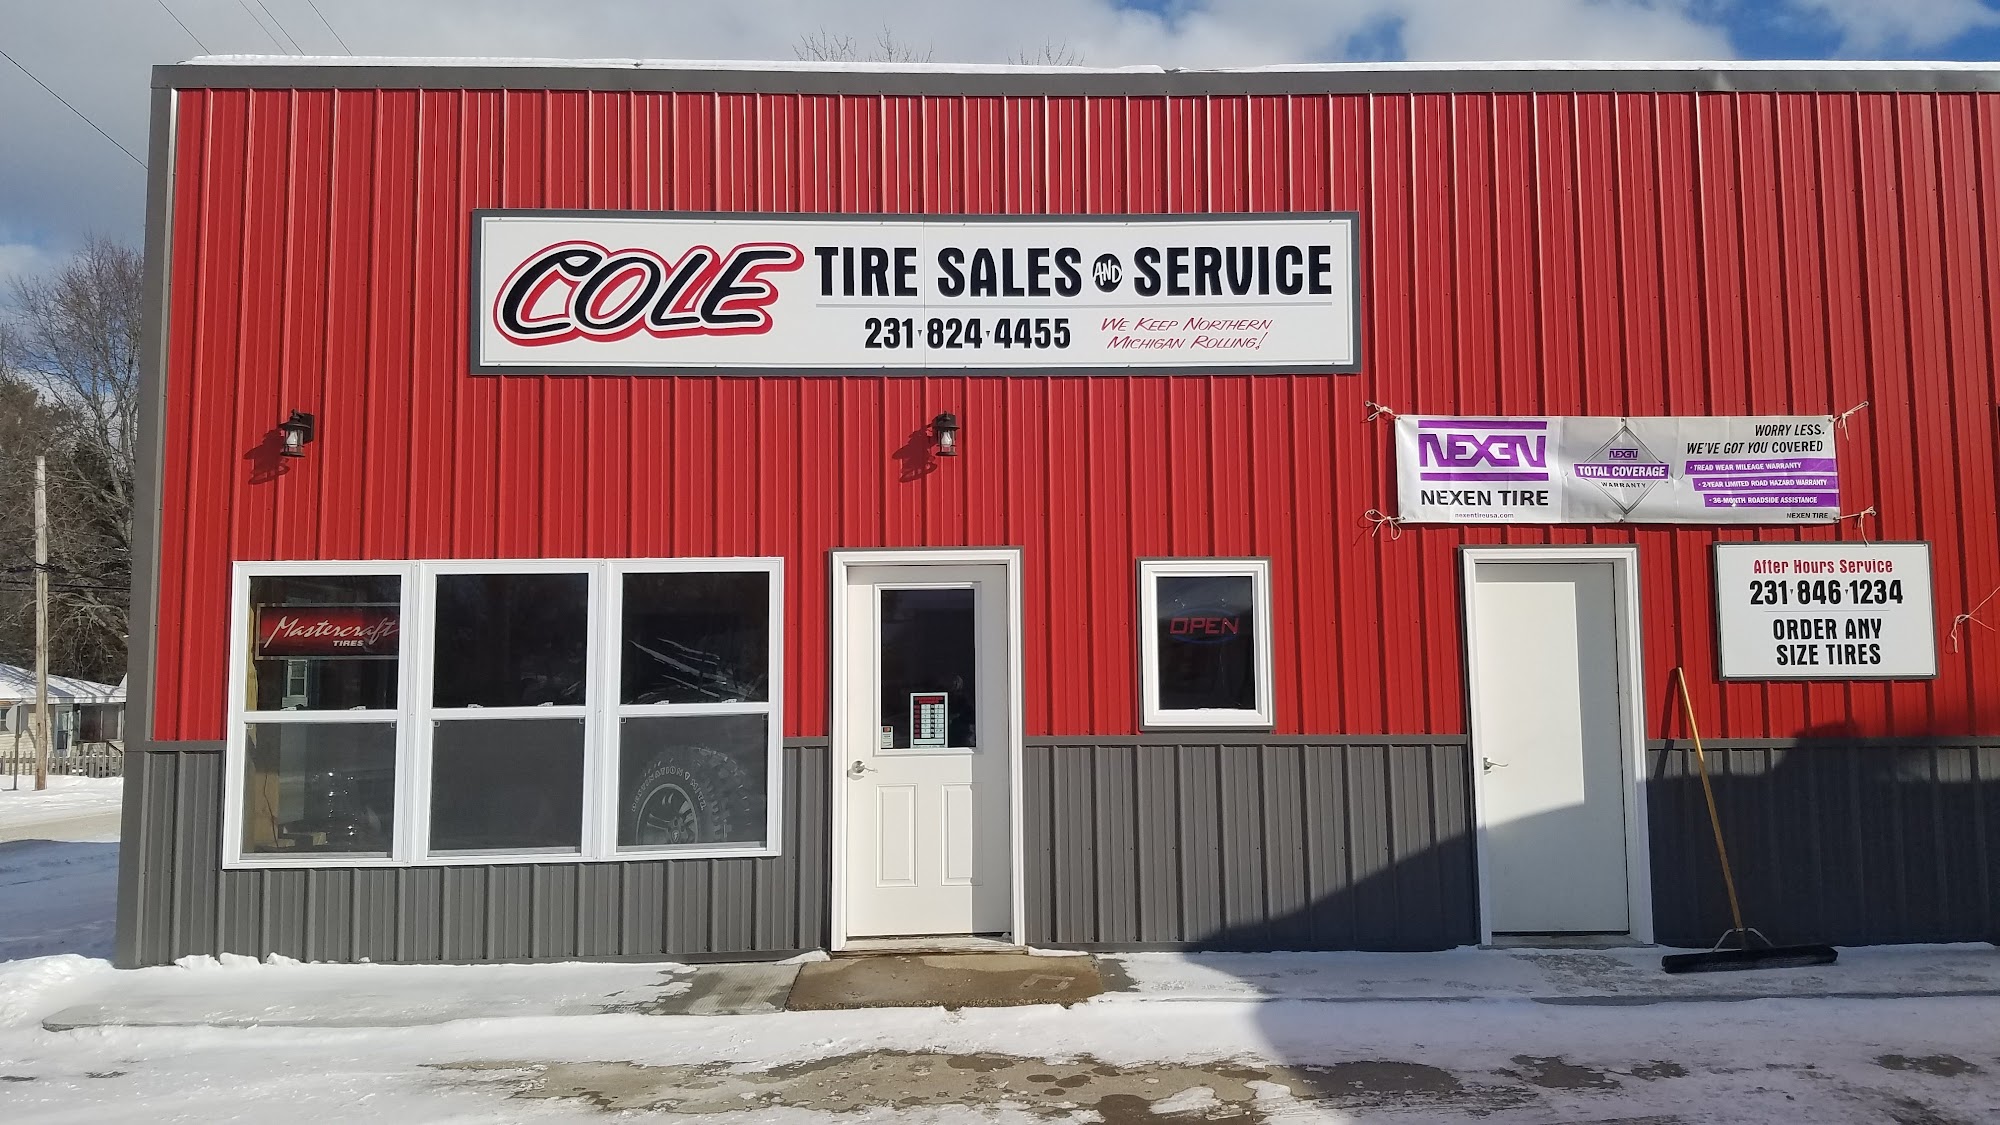 Cole Tire Sales & Service